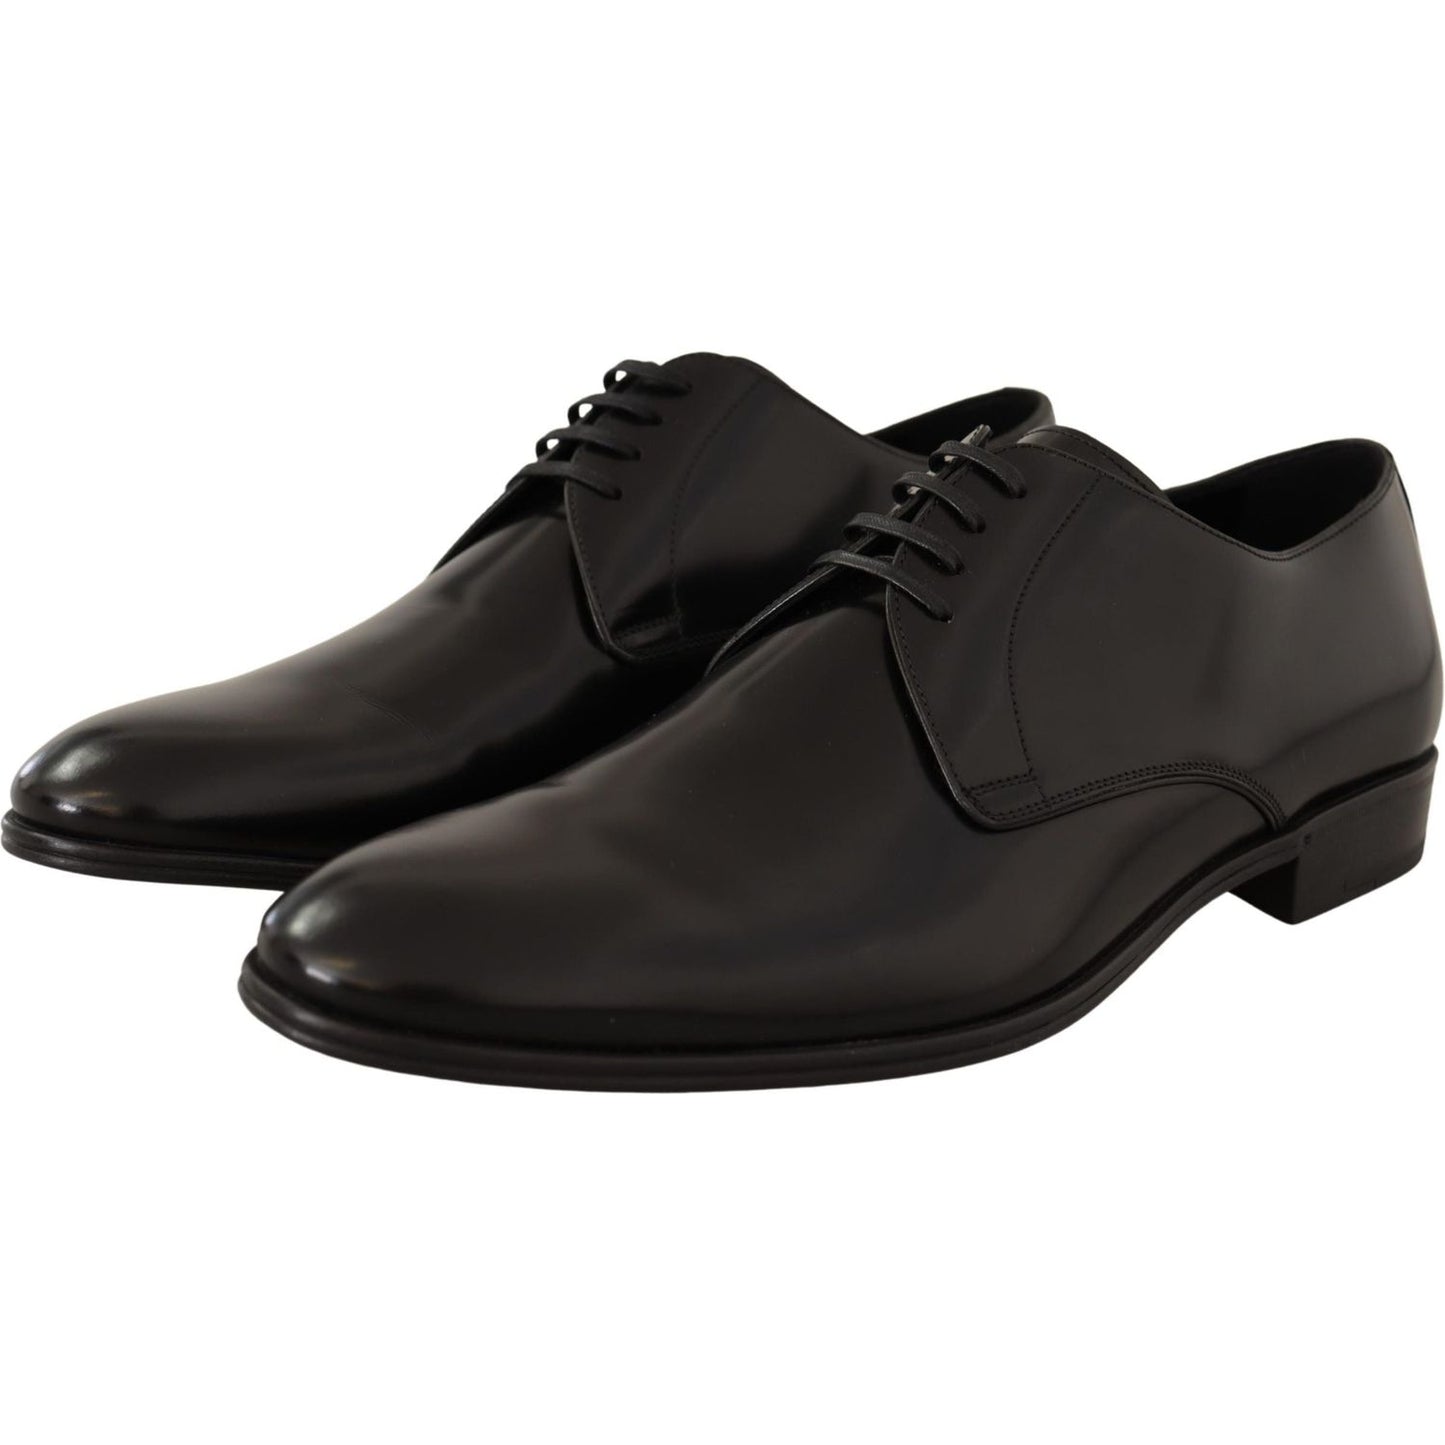 Dolce & Gabbana Elegant Black Leather Derby Shoes black-leather-lace-up-men-dress-derby-shoes-2 Dress Shoes IMG_3701-scaled-a57a2233-3e5.jpg